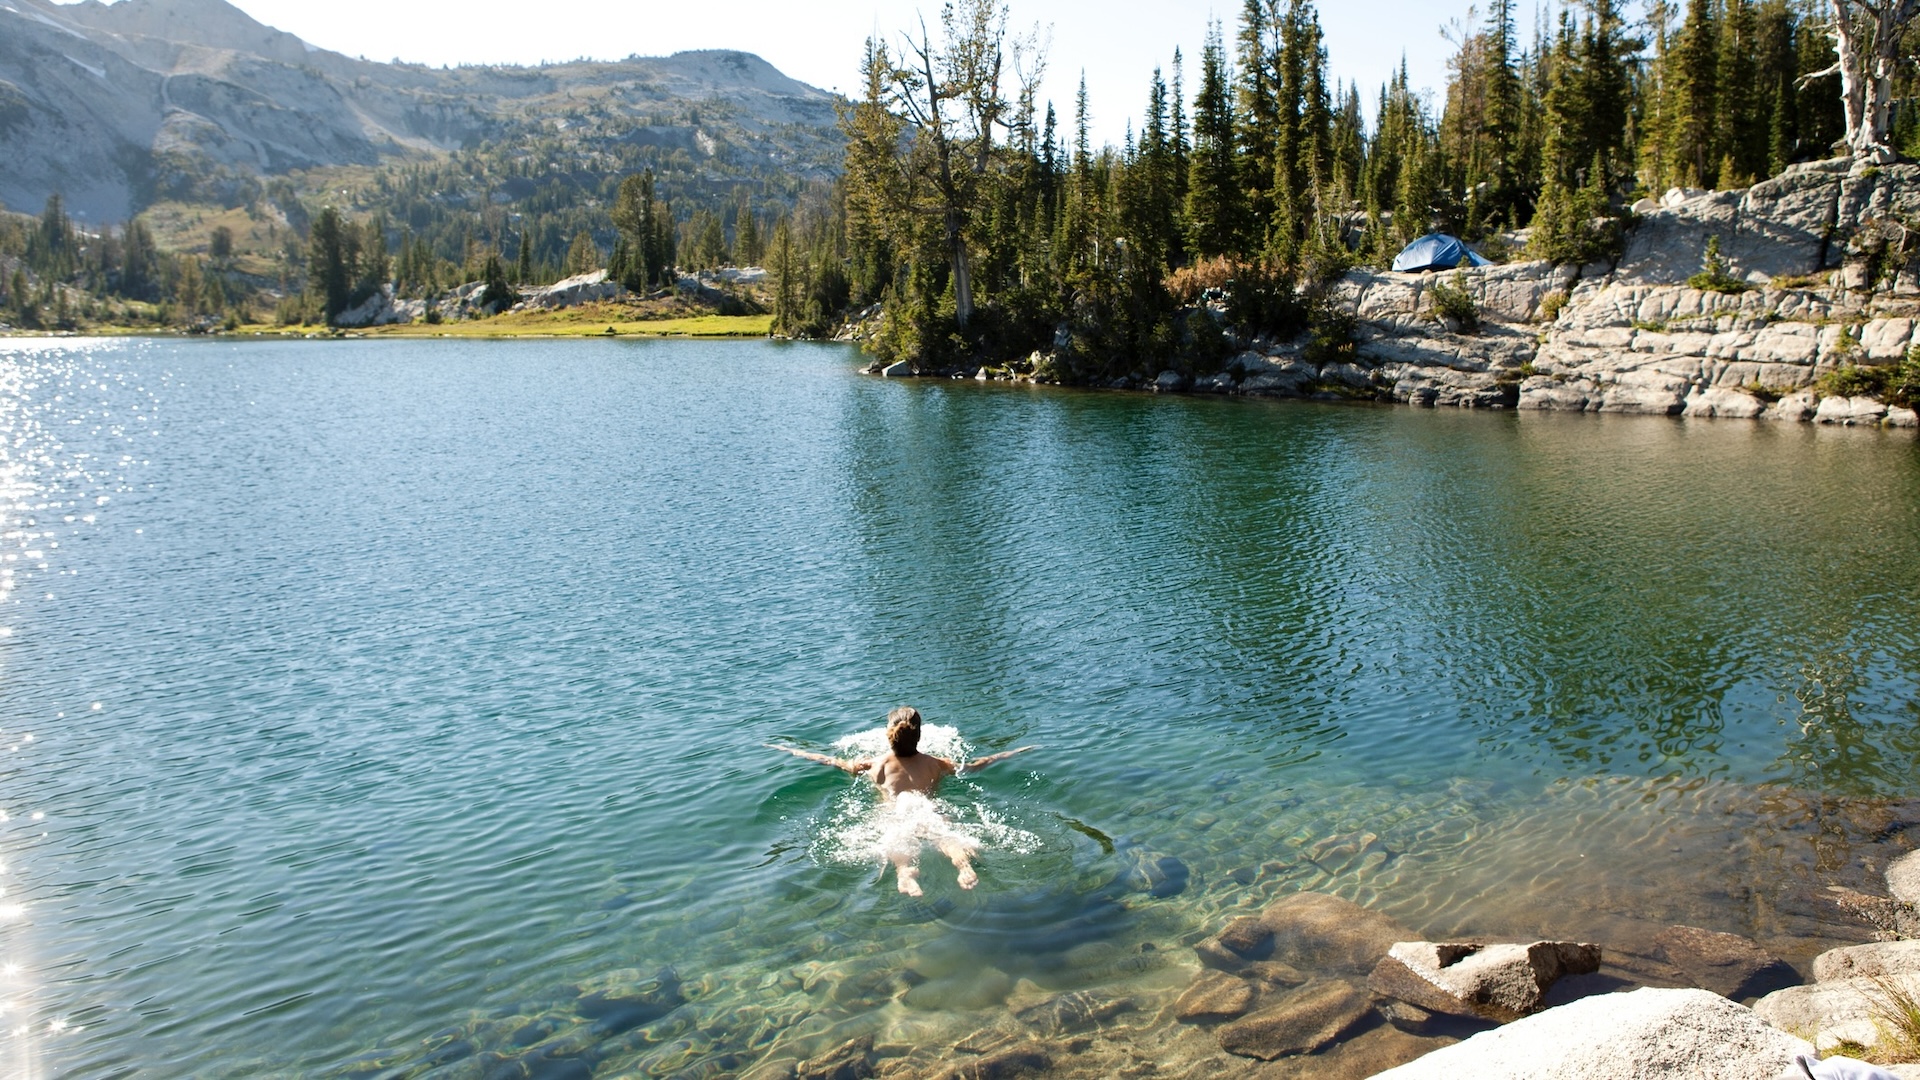 A person wild swimming in a lake